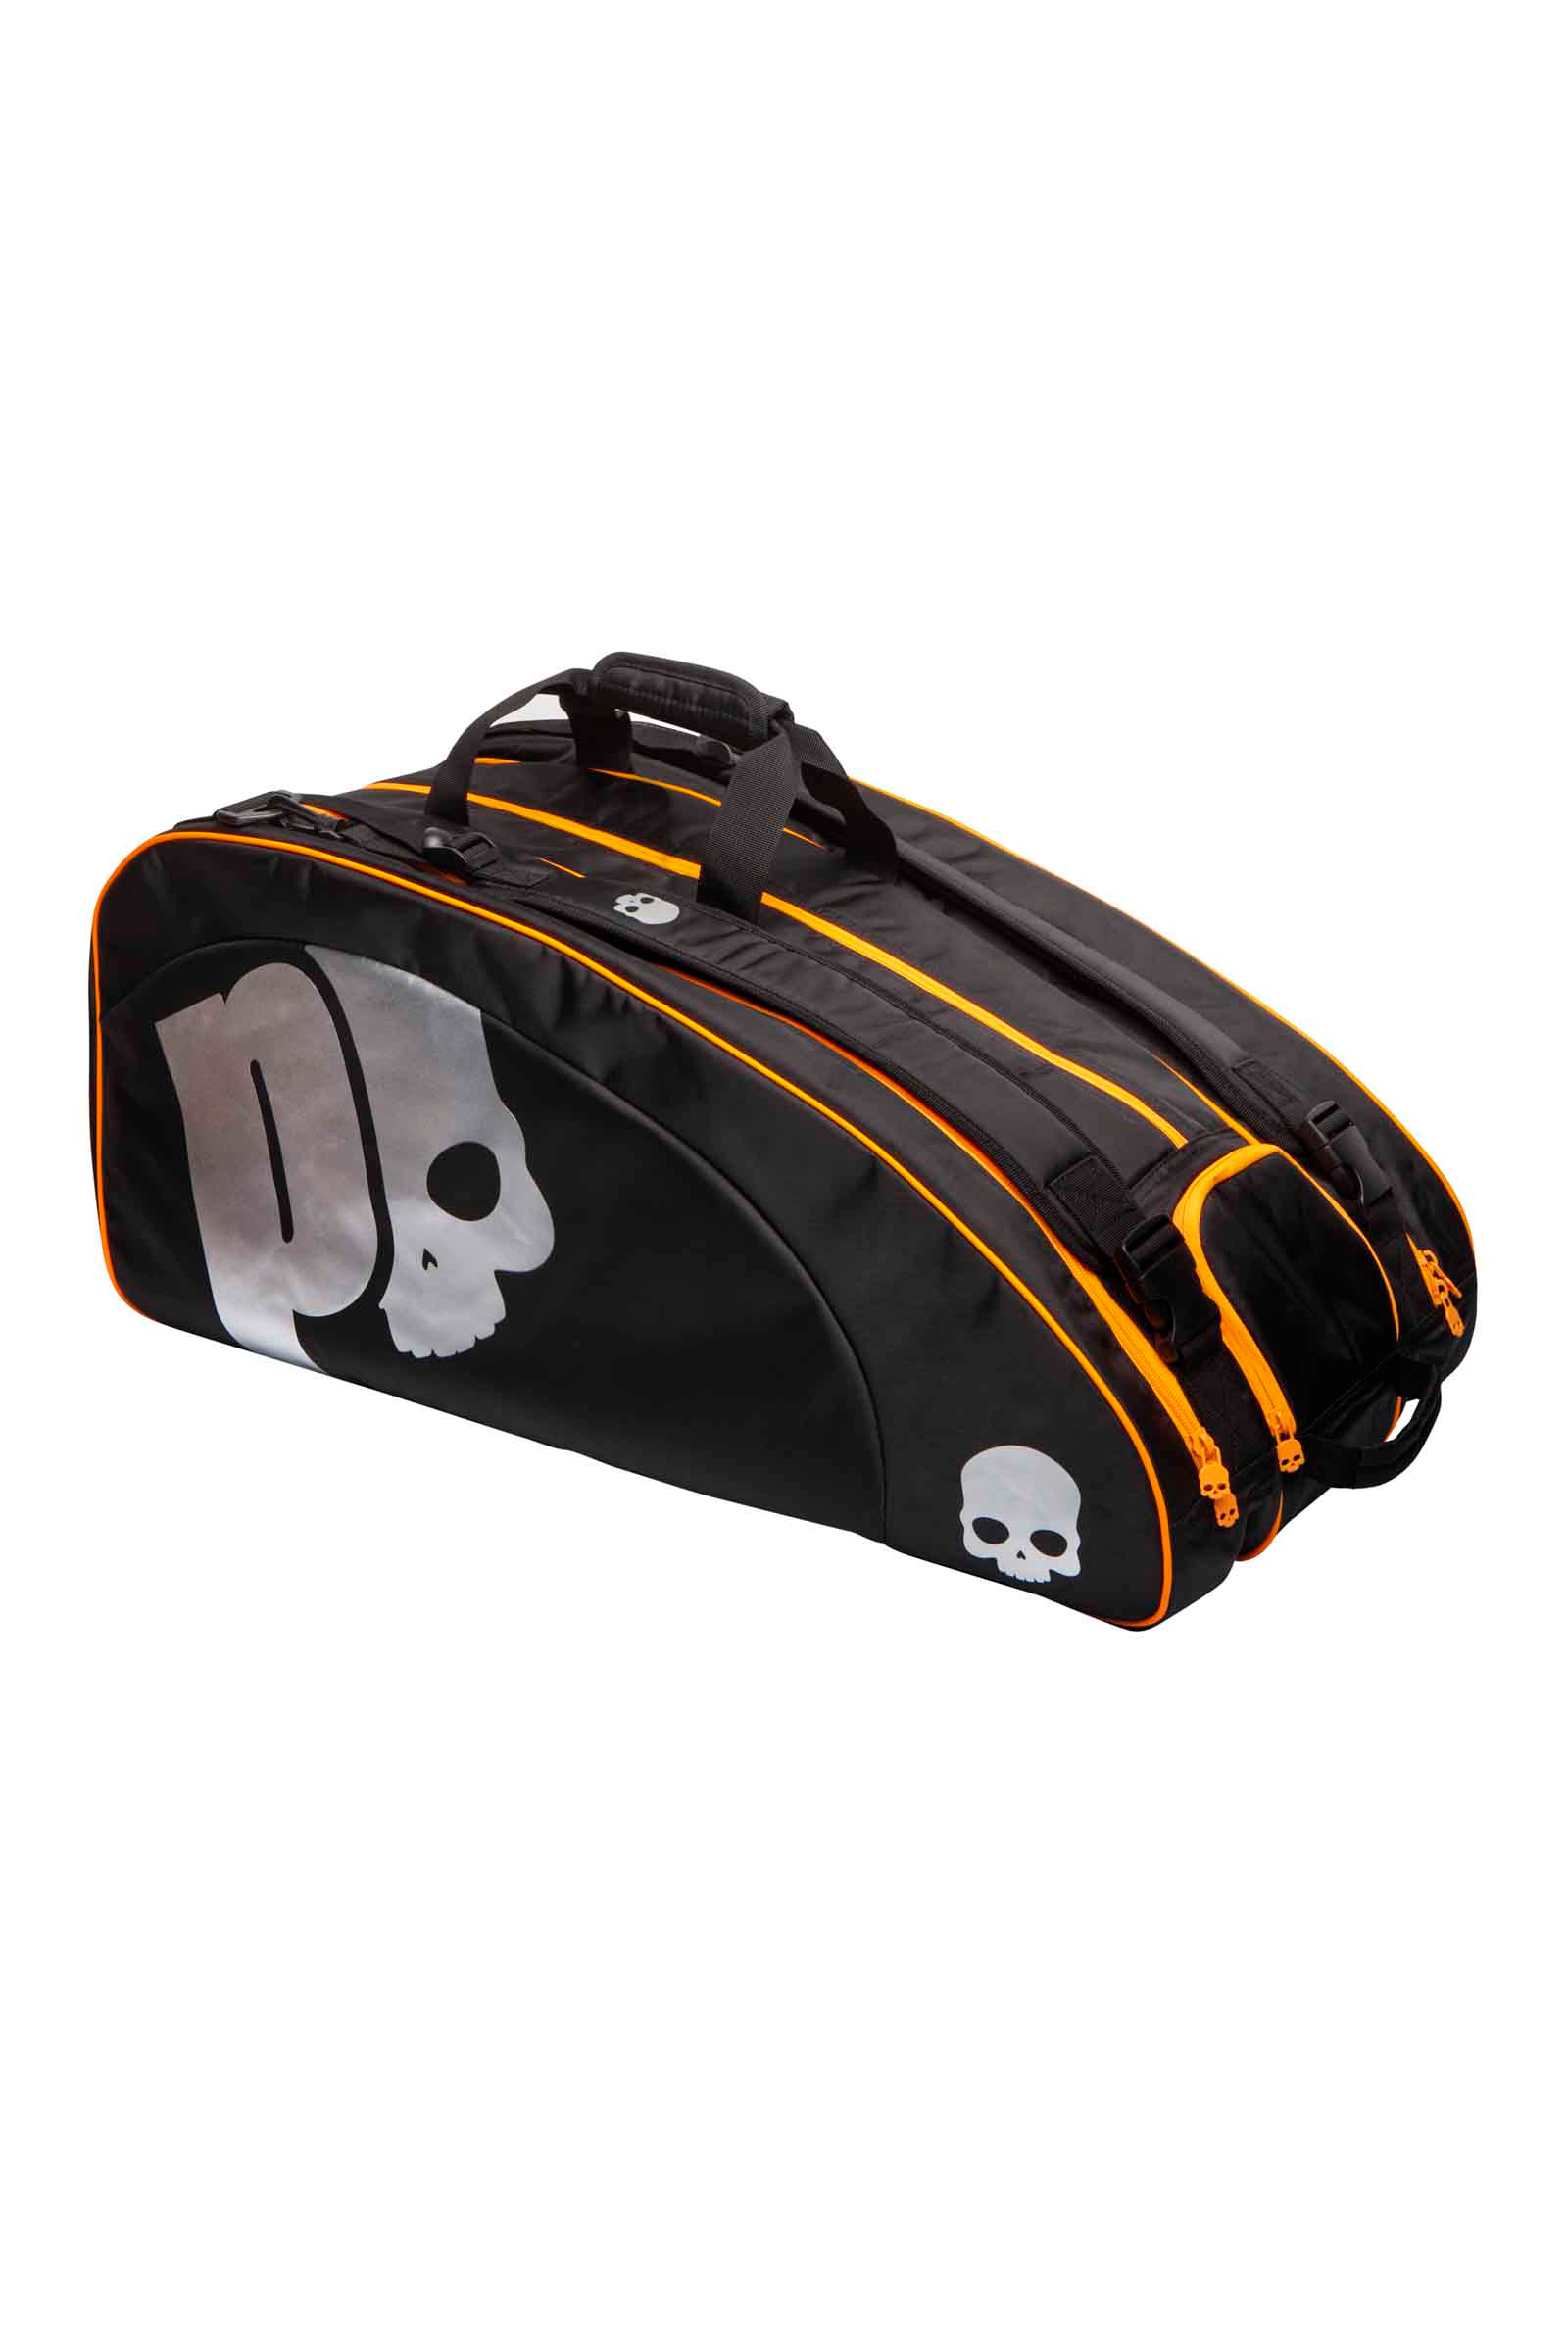 CHROME BAG PRINCE BY HYDROGEN - Accessories - Hydrogen - Luxury Sportwear